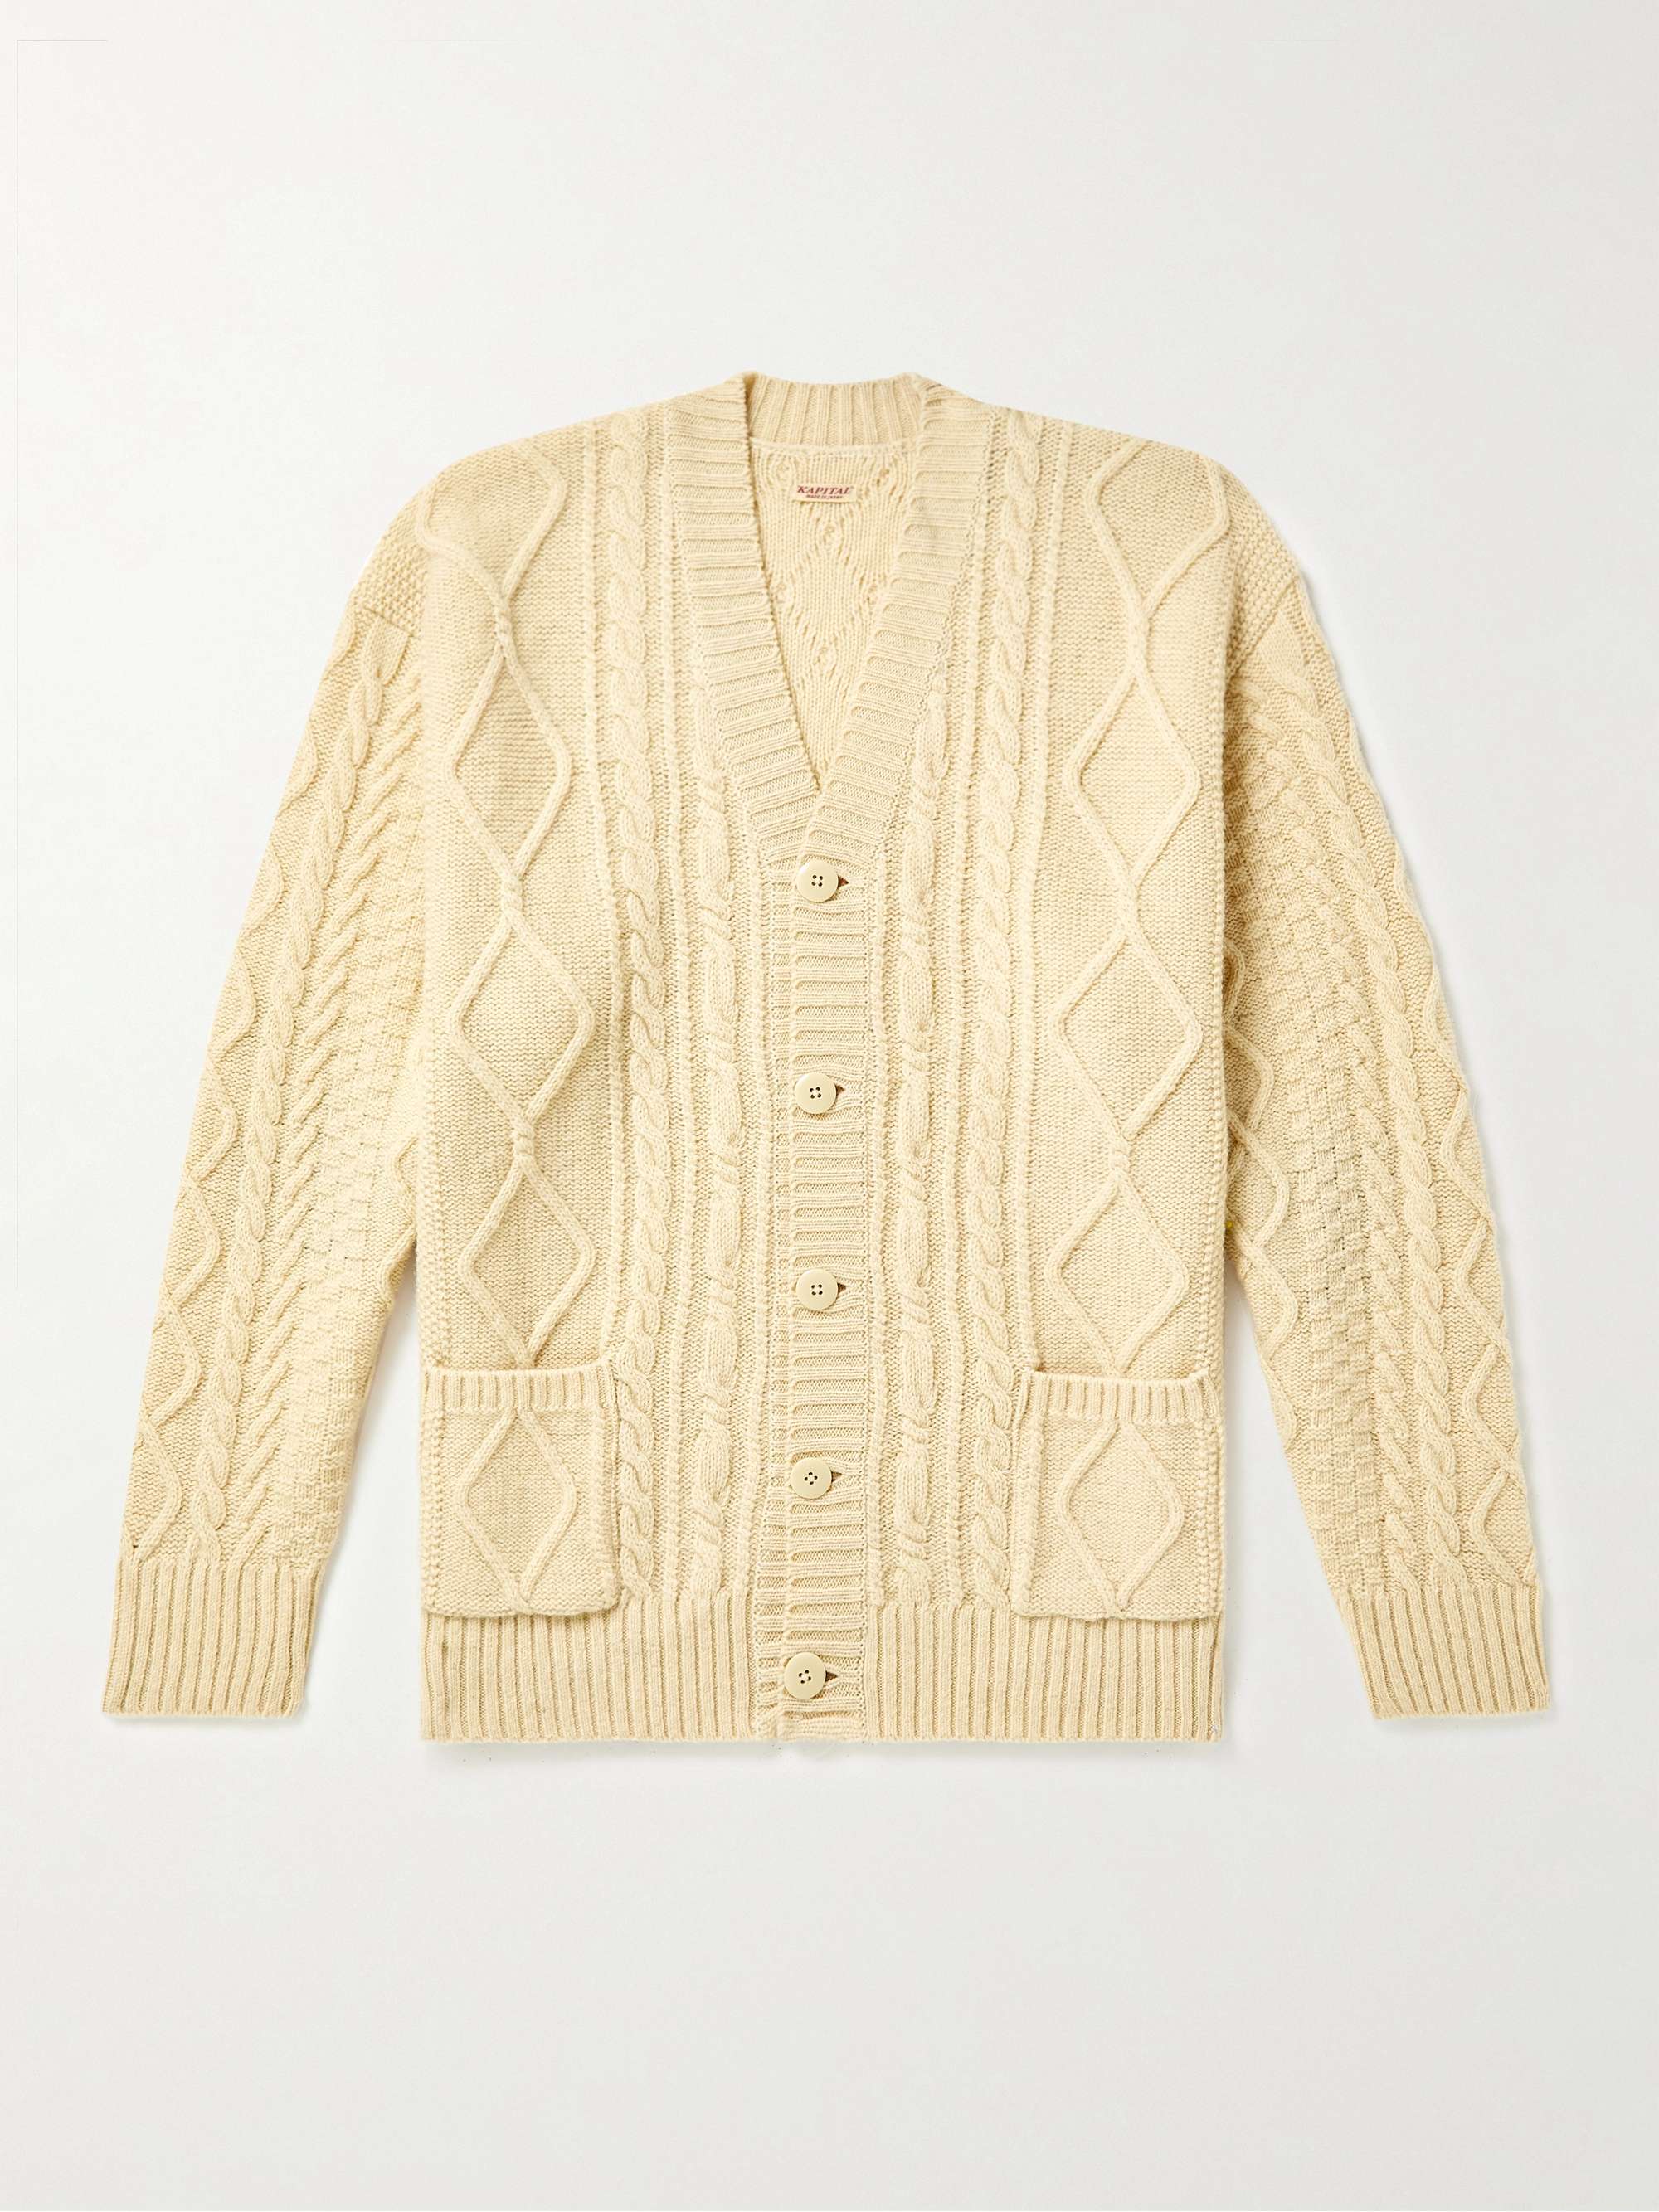 KAPITAL Intarsia Cable-Knit Wool-Blend Cardigan for Men | MR PORTER